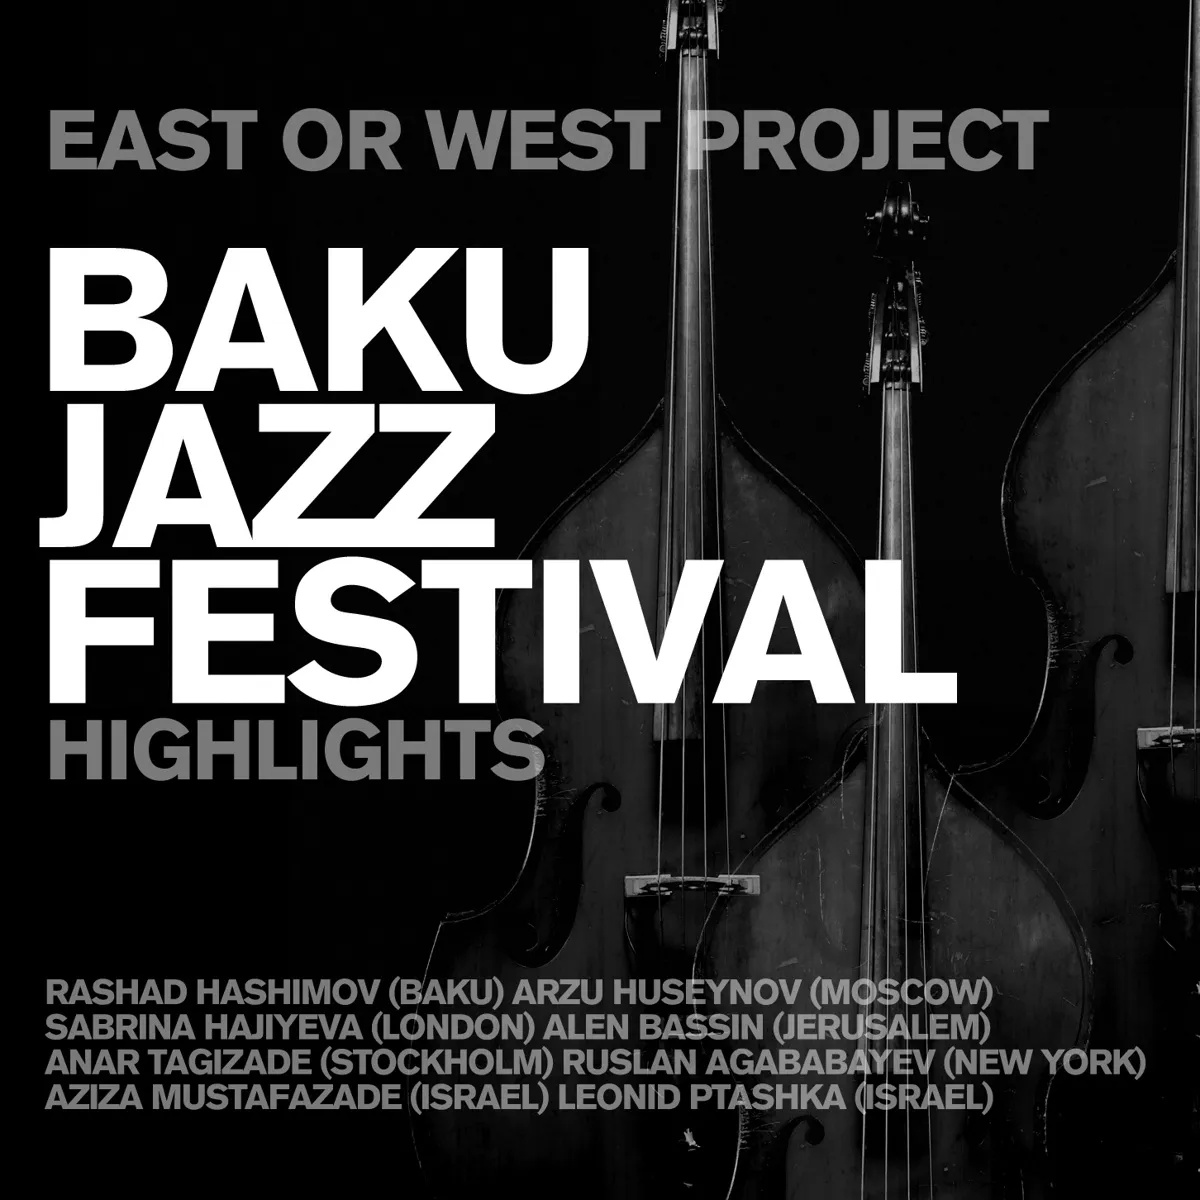 Baku Jazzfestival-Highlights - East Or West Project. (CD)